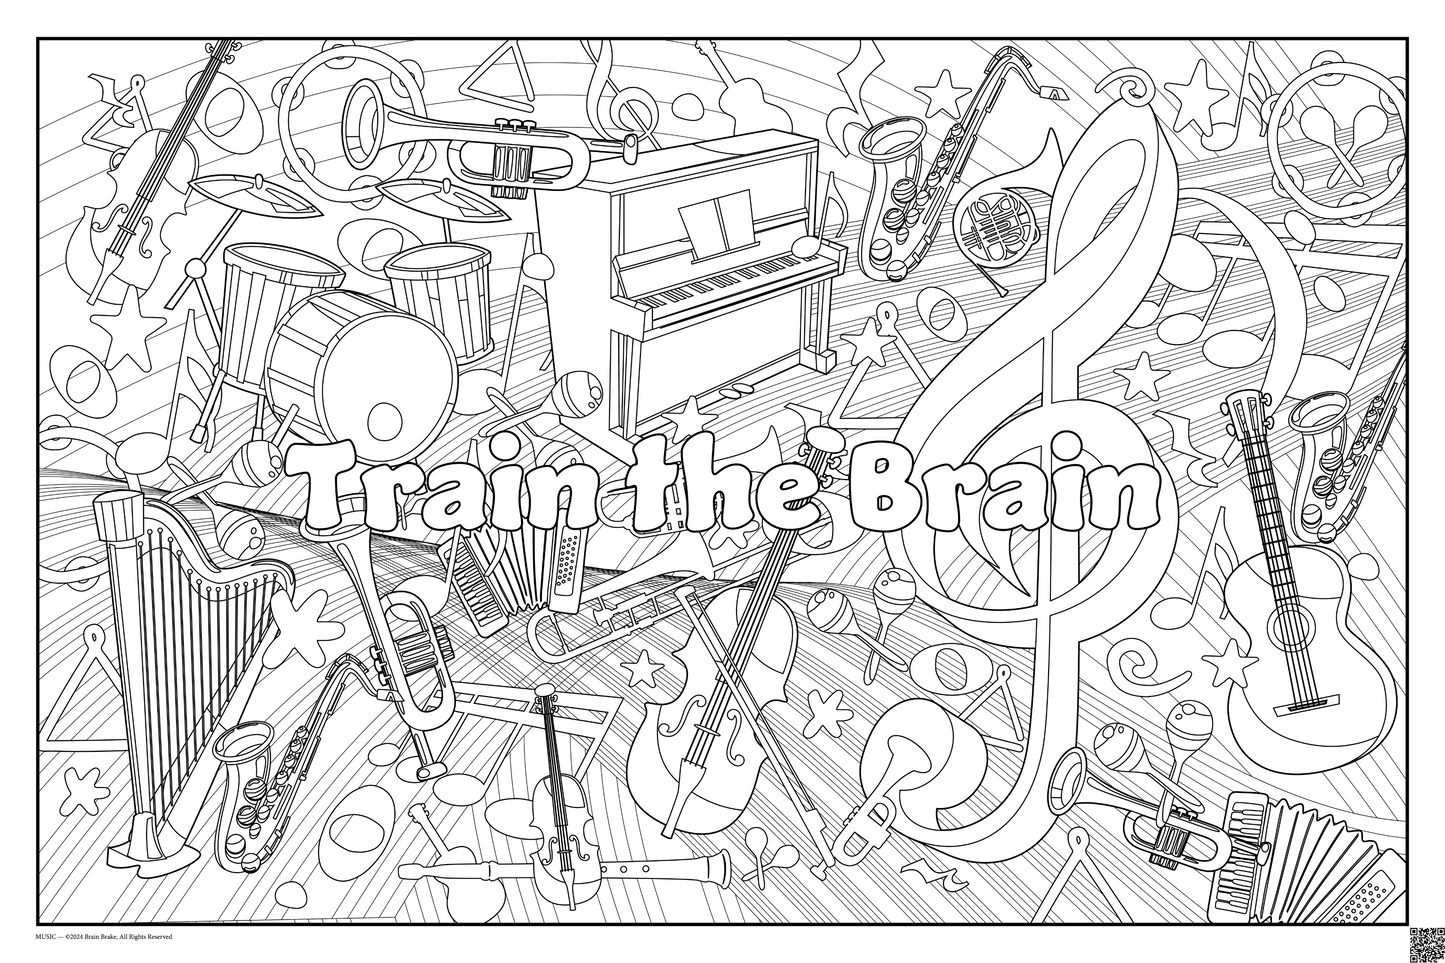 Calming Corner: Train the Brain